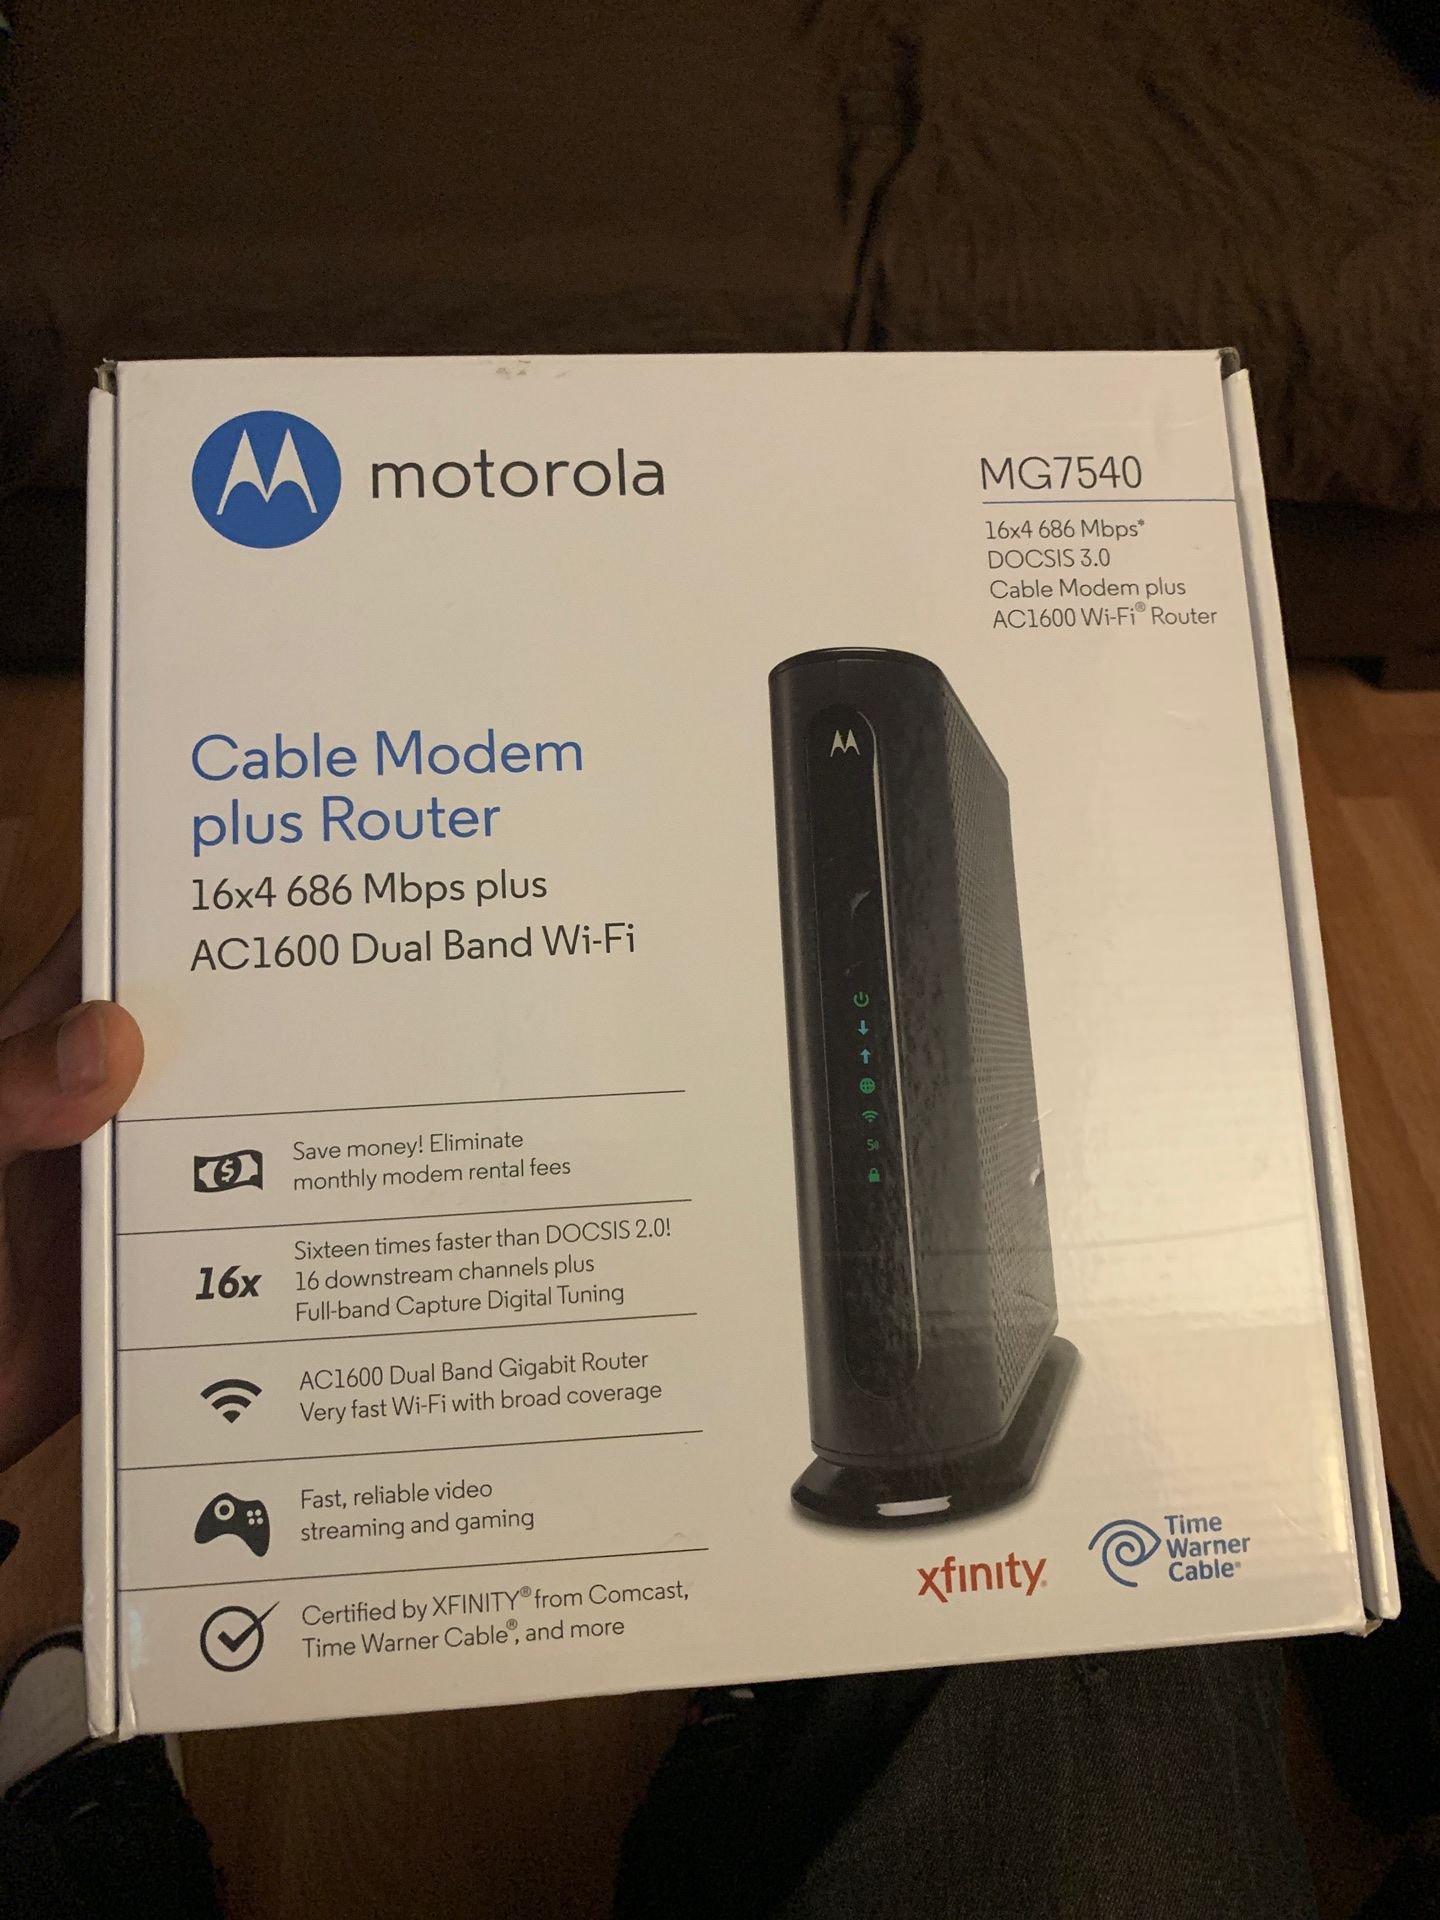 Motorola - Cable Modem Plus Router